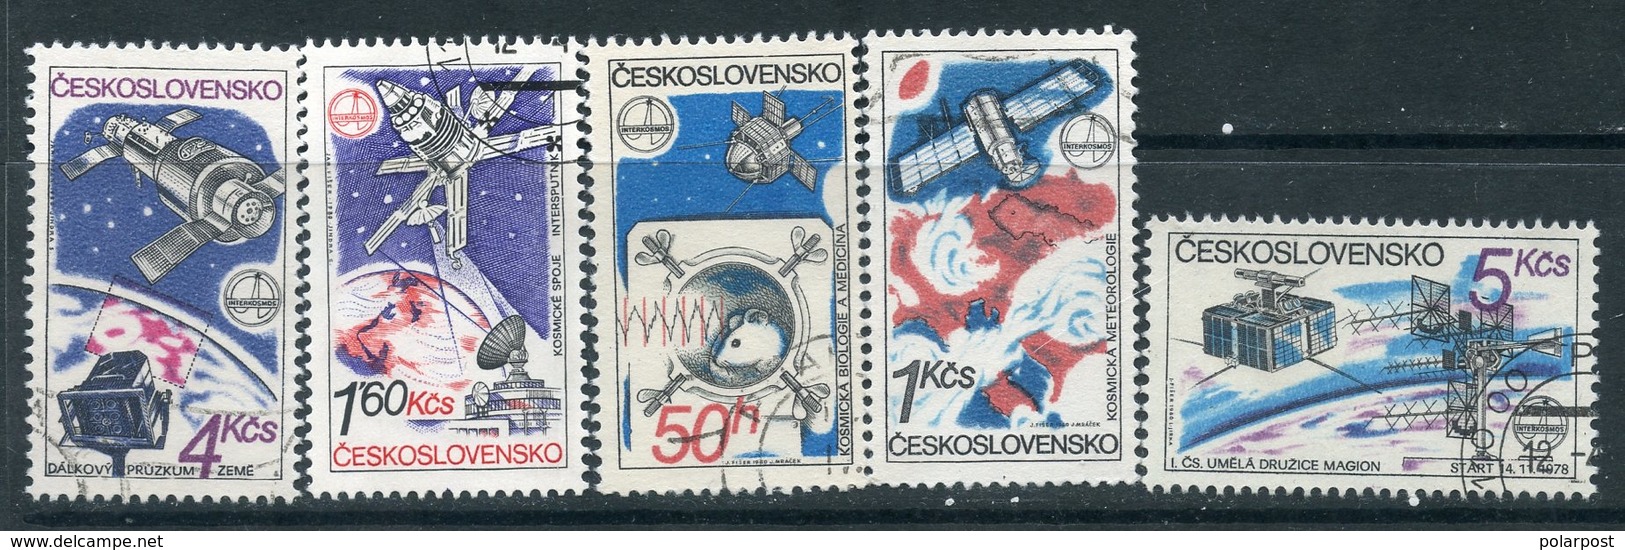 Y85 CZECHOSLOVAKIA 1980 2558-2562 Space Program "Intercosmos" - Europe